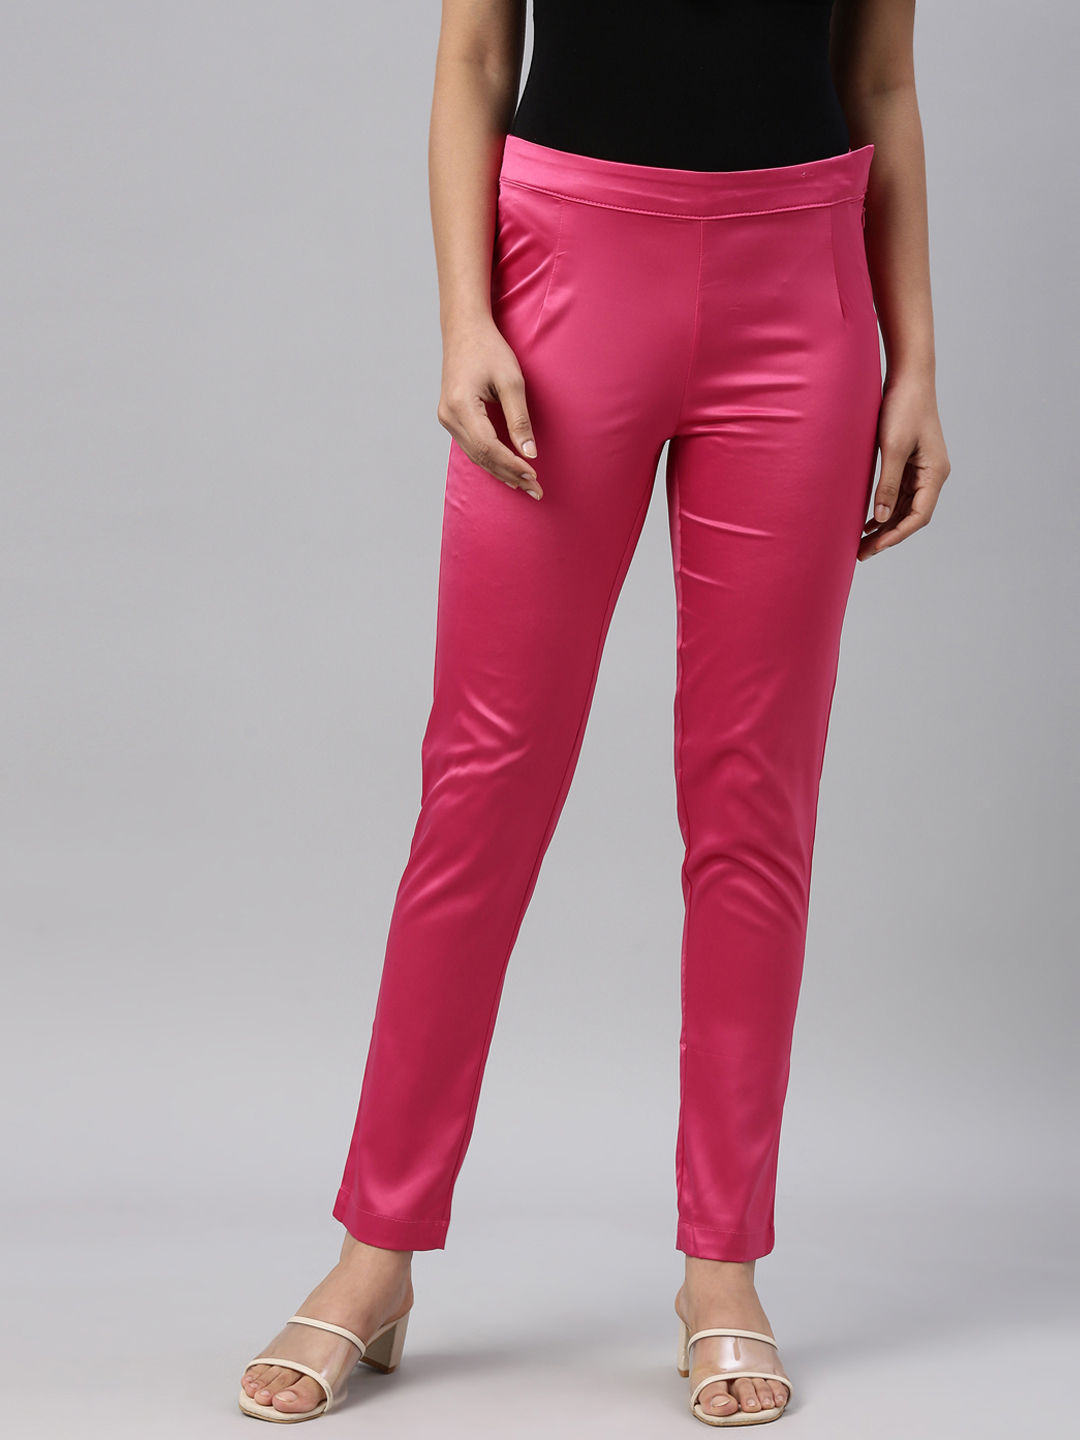 Hot Pink High Waist Straight Leg Pants | Sister Snatched Fashion Brand